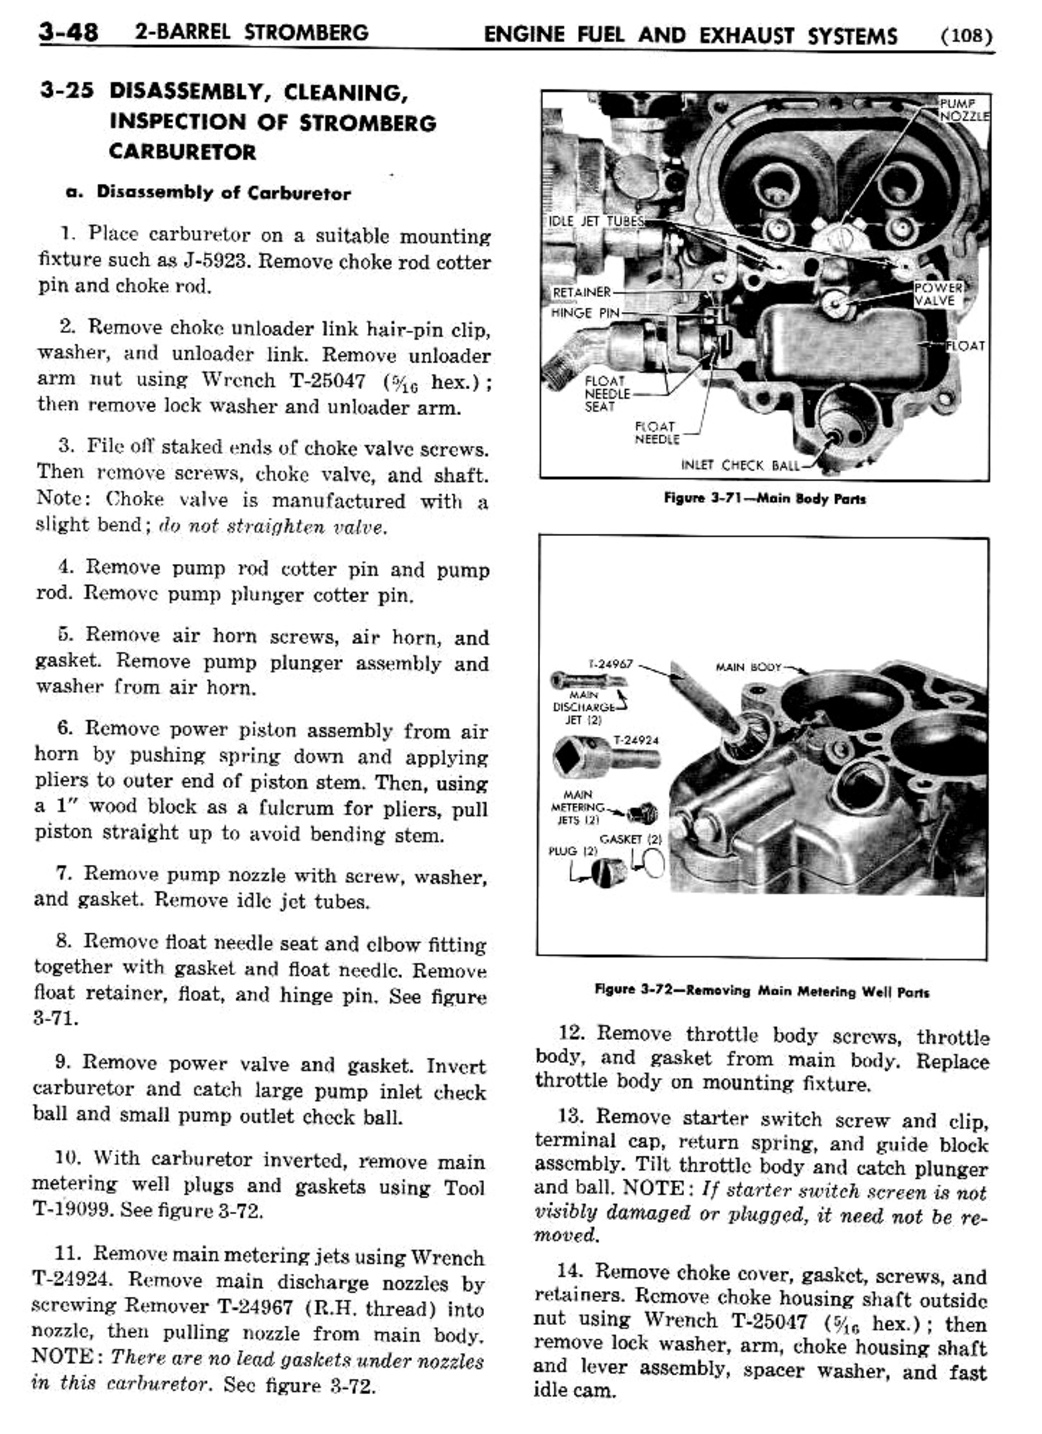 n_04 1956 Buick Shop Manual - Engine Fuel & Exhaust-048-048.jpg